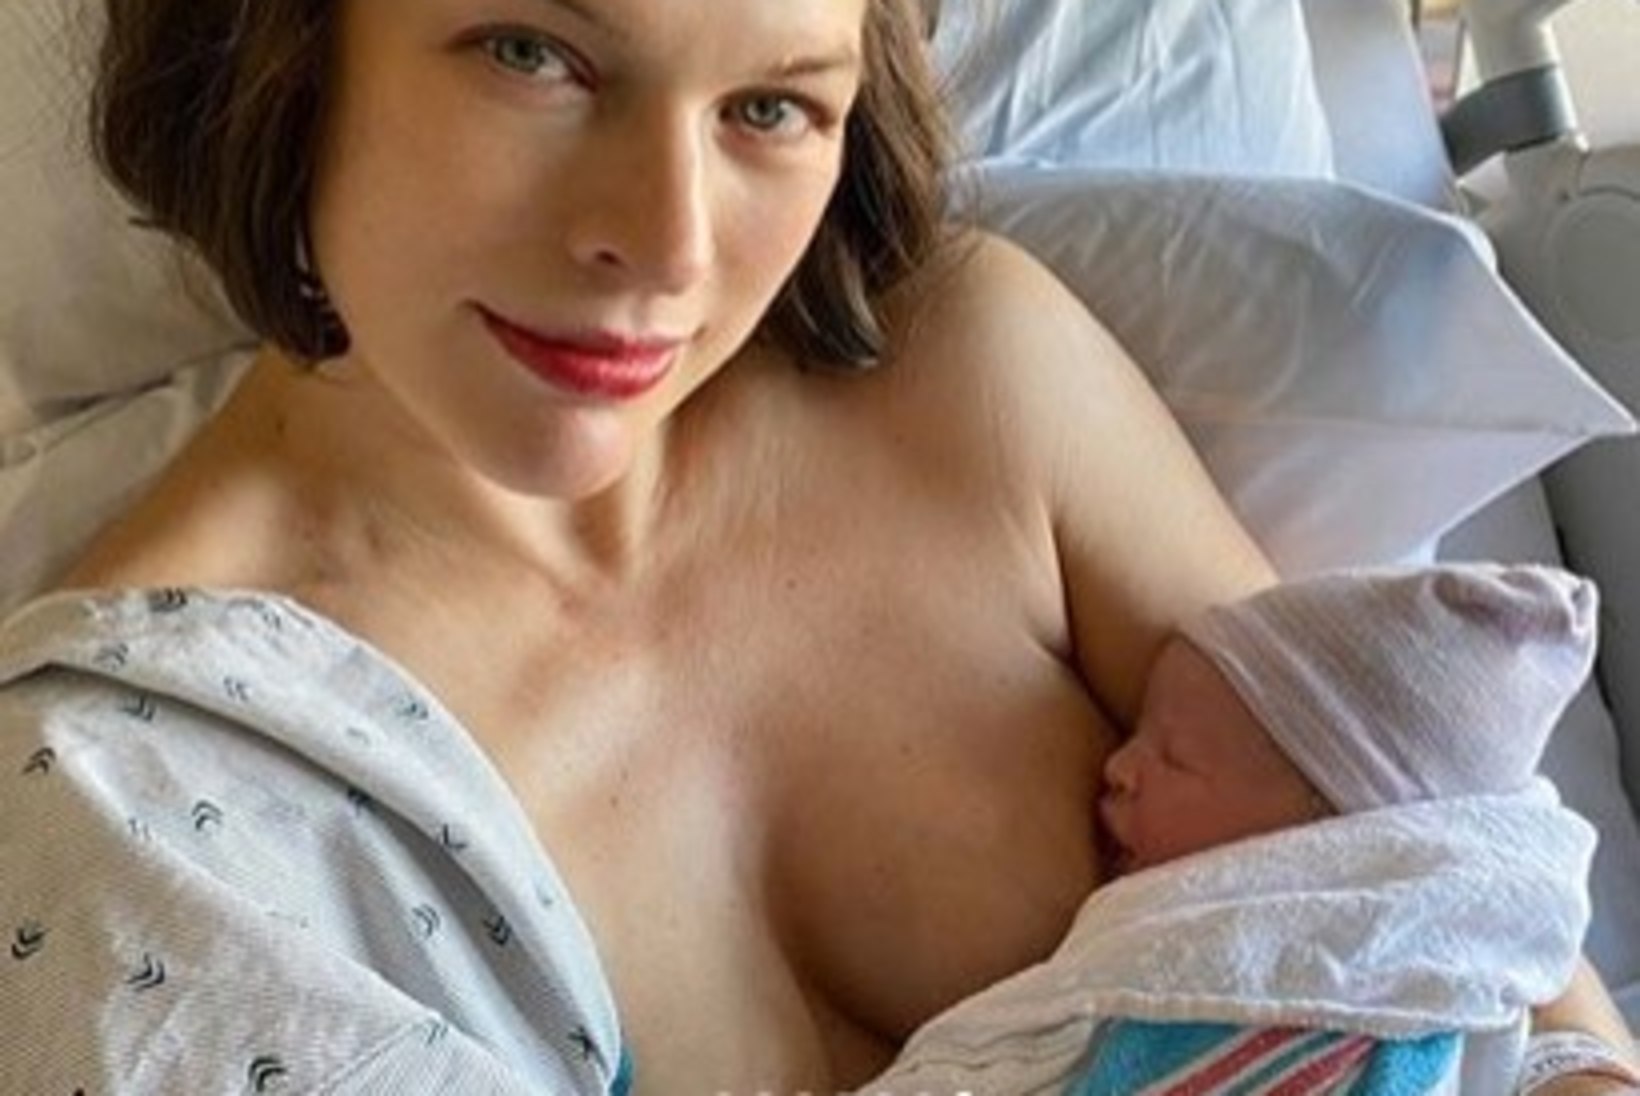 44aastane Milla Jovovich sai kolmanda lapse